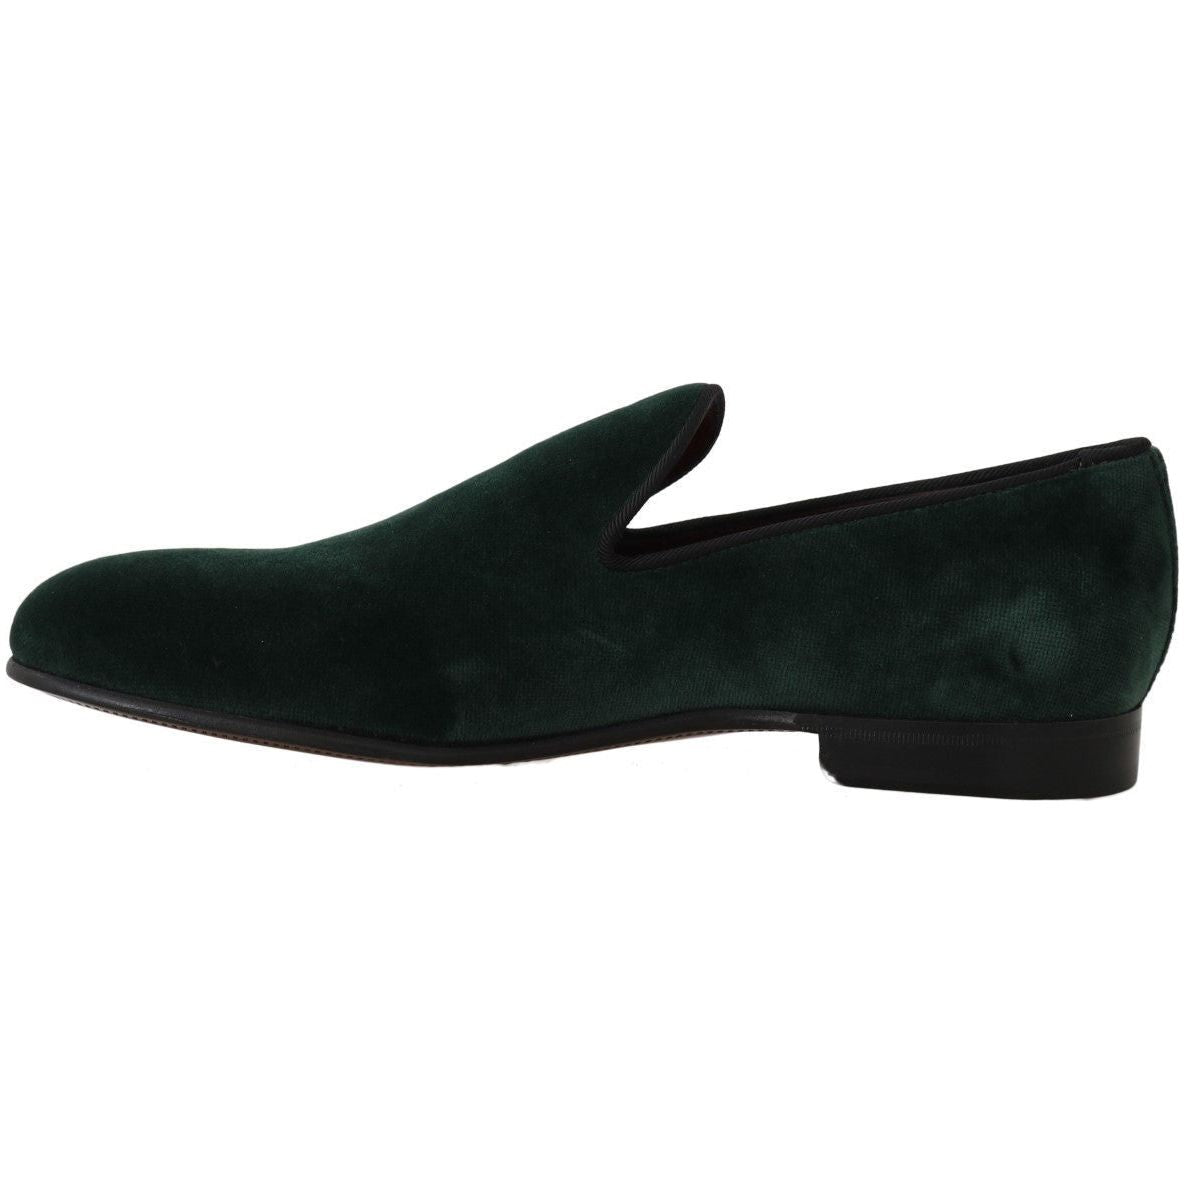 Dolce & Gabbana Elegant Green Suede Slip-On Loafers green-suede-leather-slippers-loafers 550450-green-suede-leather-slippers-loafers-5_48efdca3-ae75-4e17-ba1f-d162e7f5442a.jpg